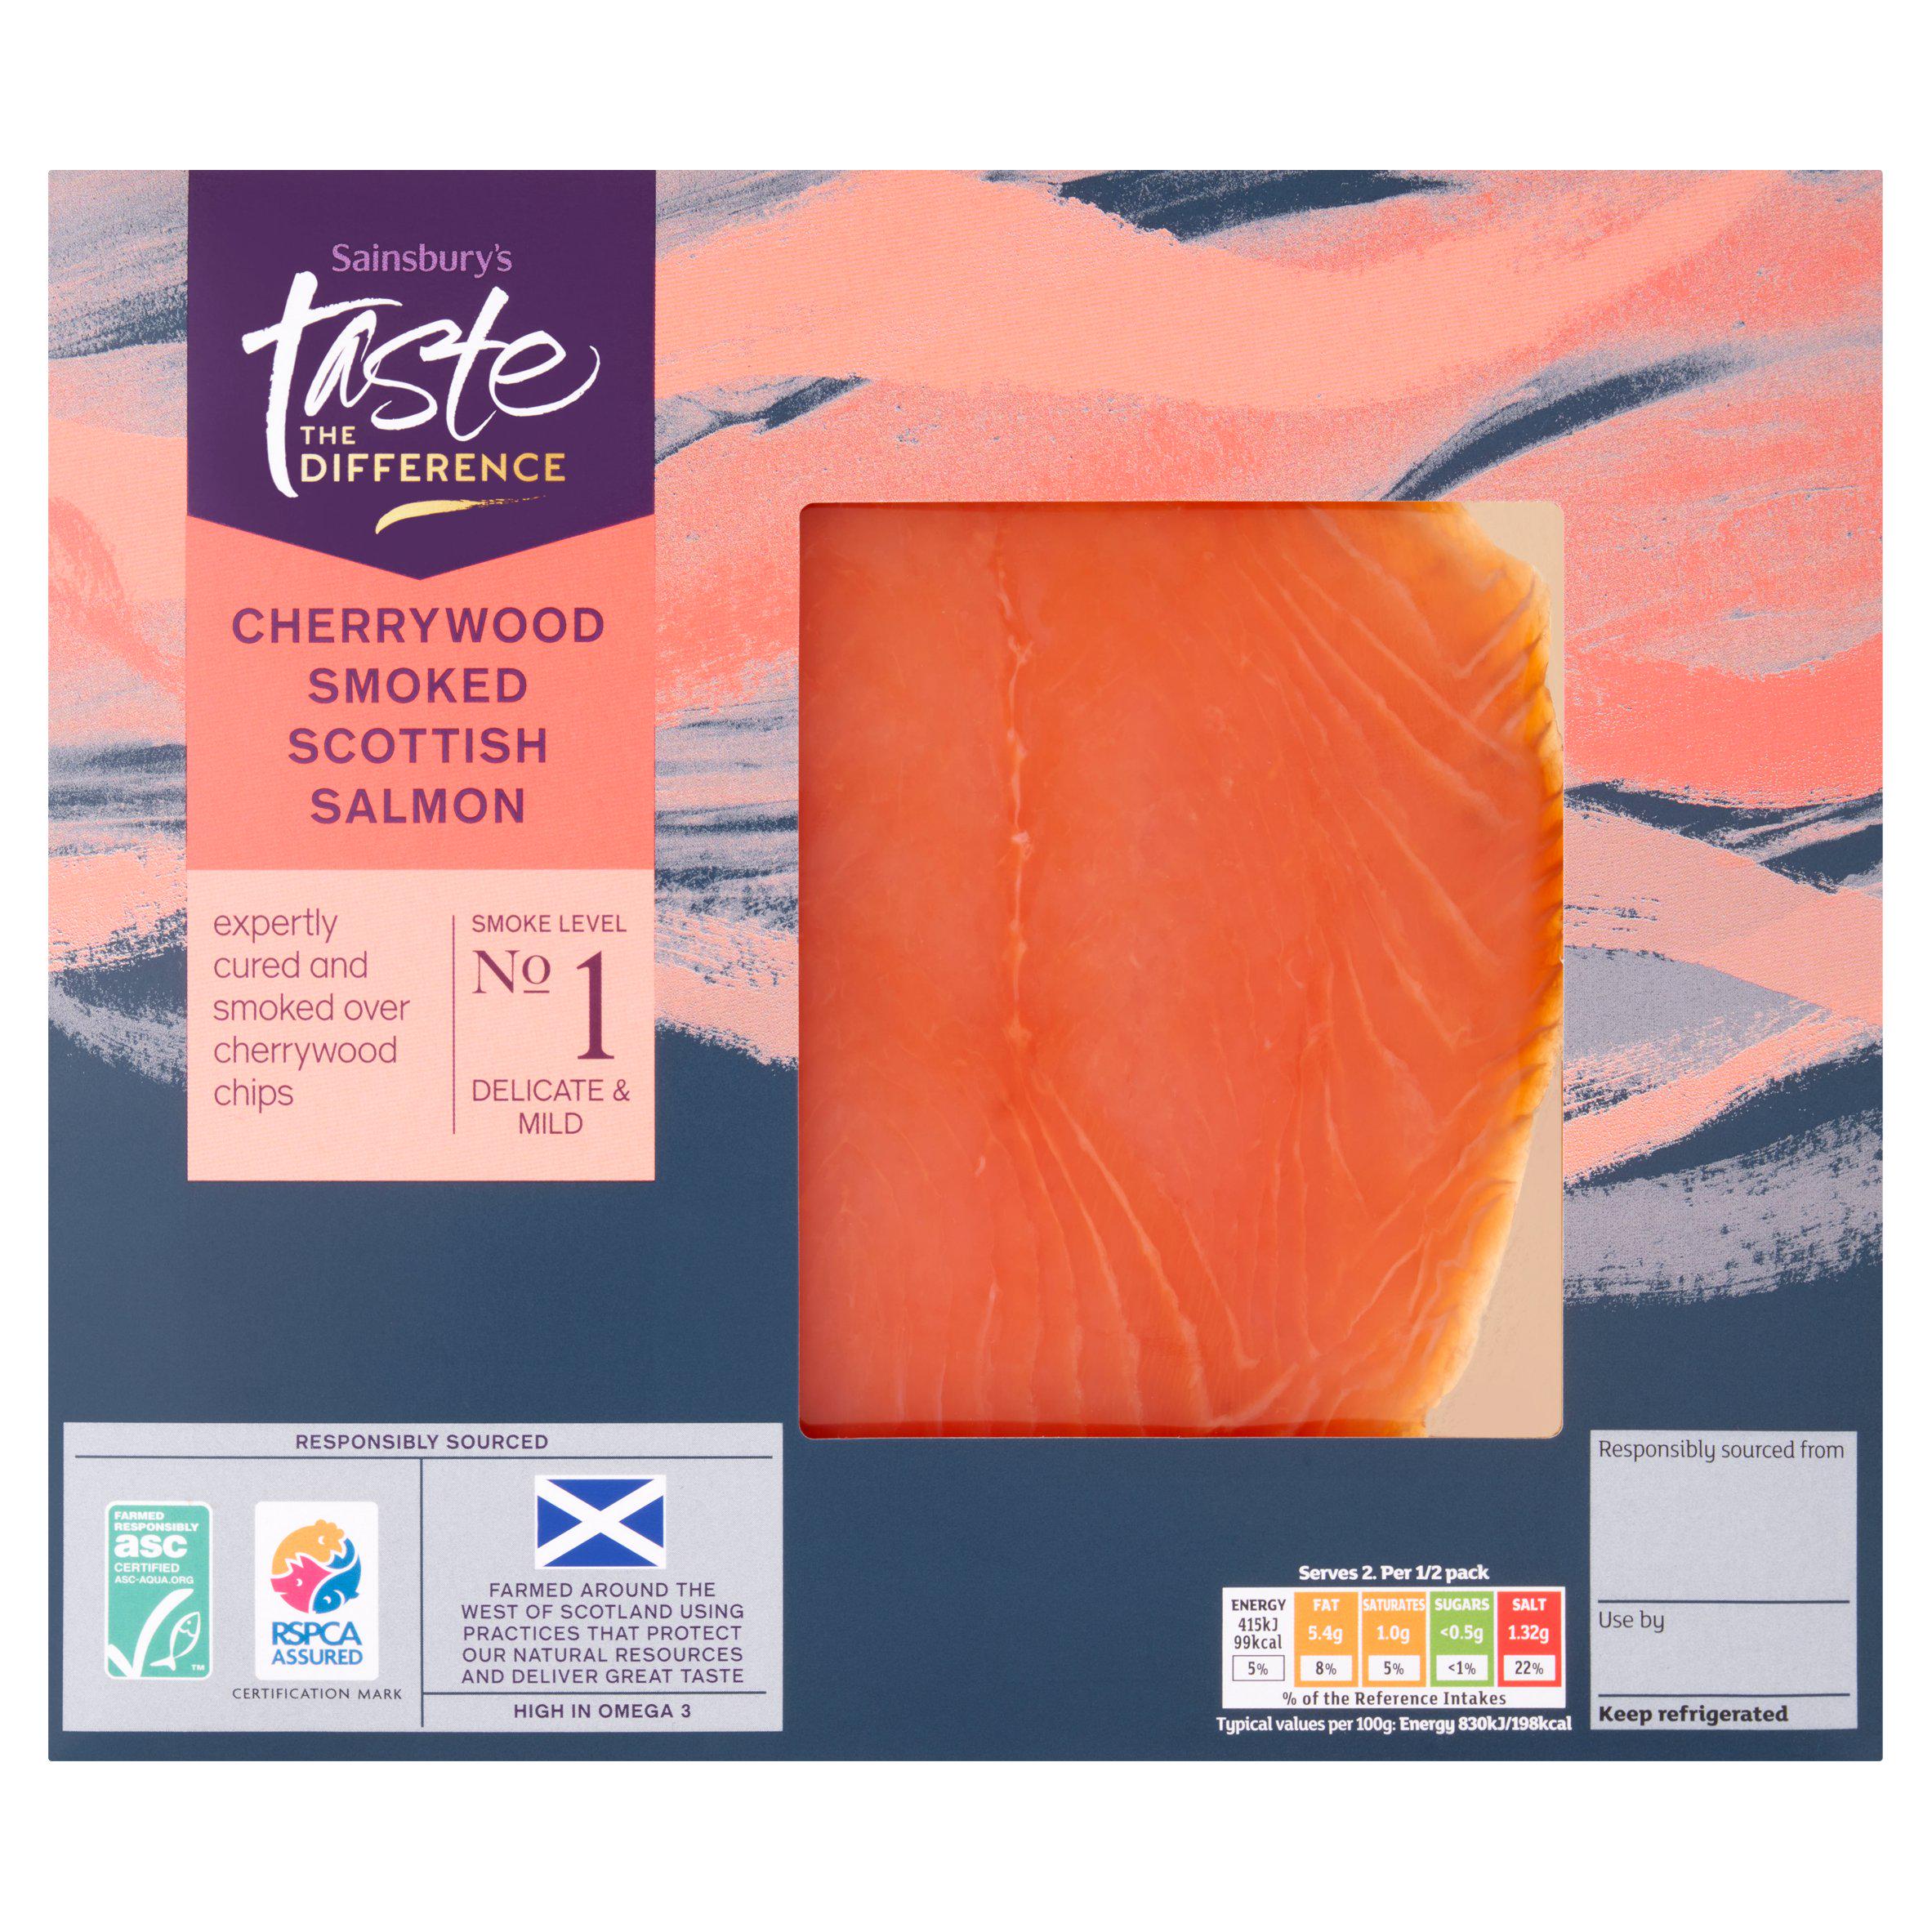 Sainsbury's ASC Scottish Cherry Wood Smoked Salmon, Taste the Difference